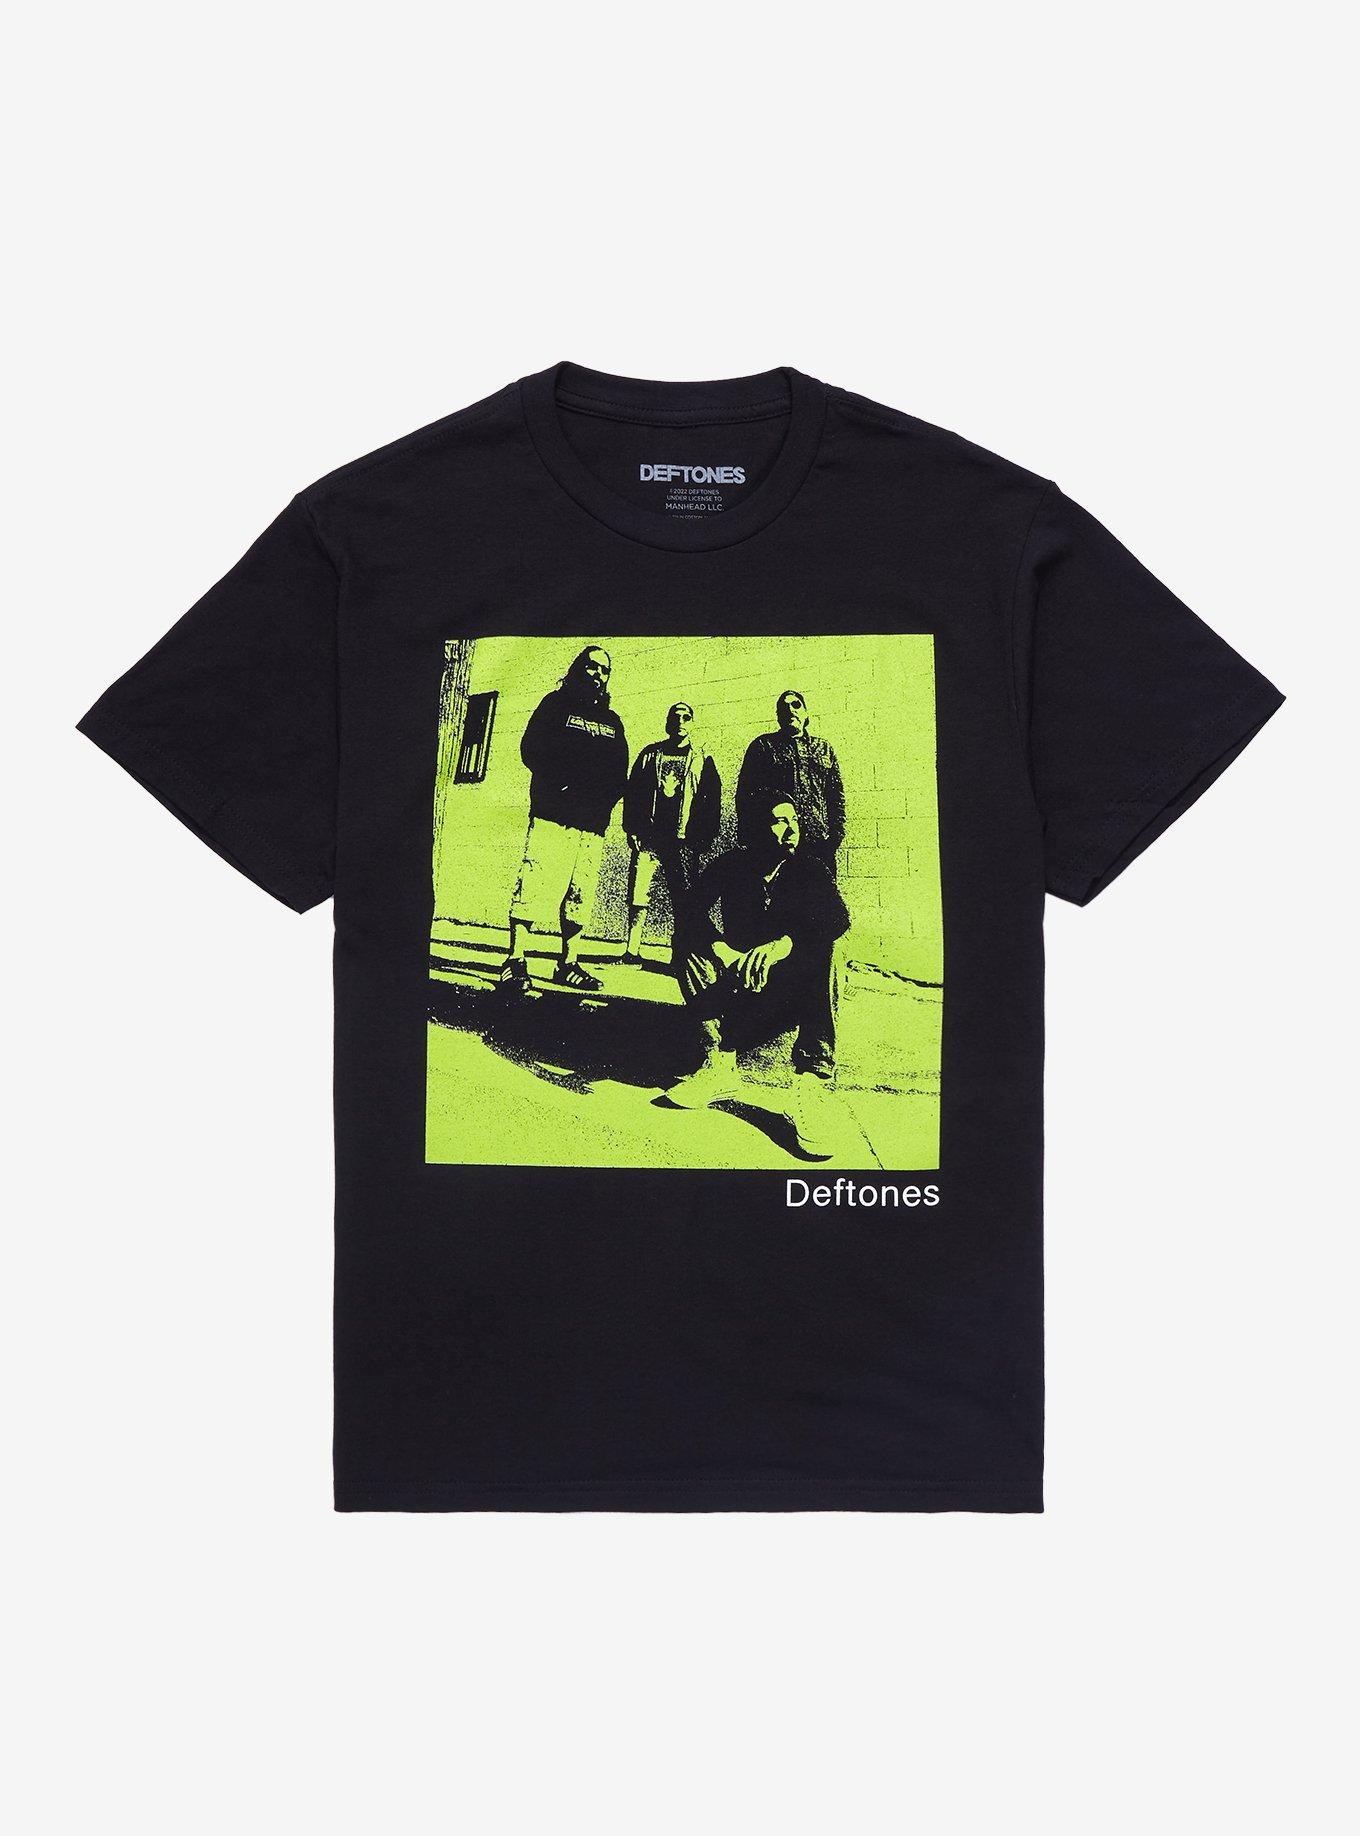 Deftones Green Group Portrait Boyfriend Fit Girls T-Shirt | Hot Topic